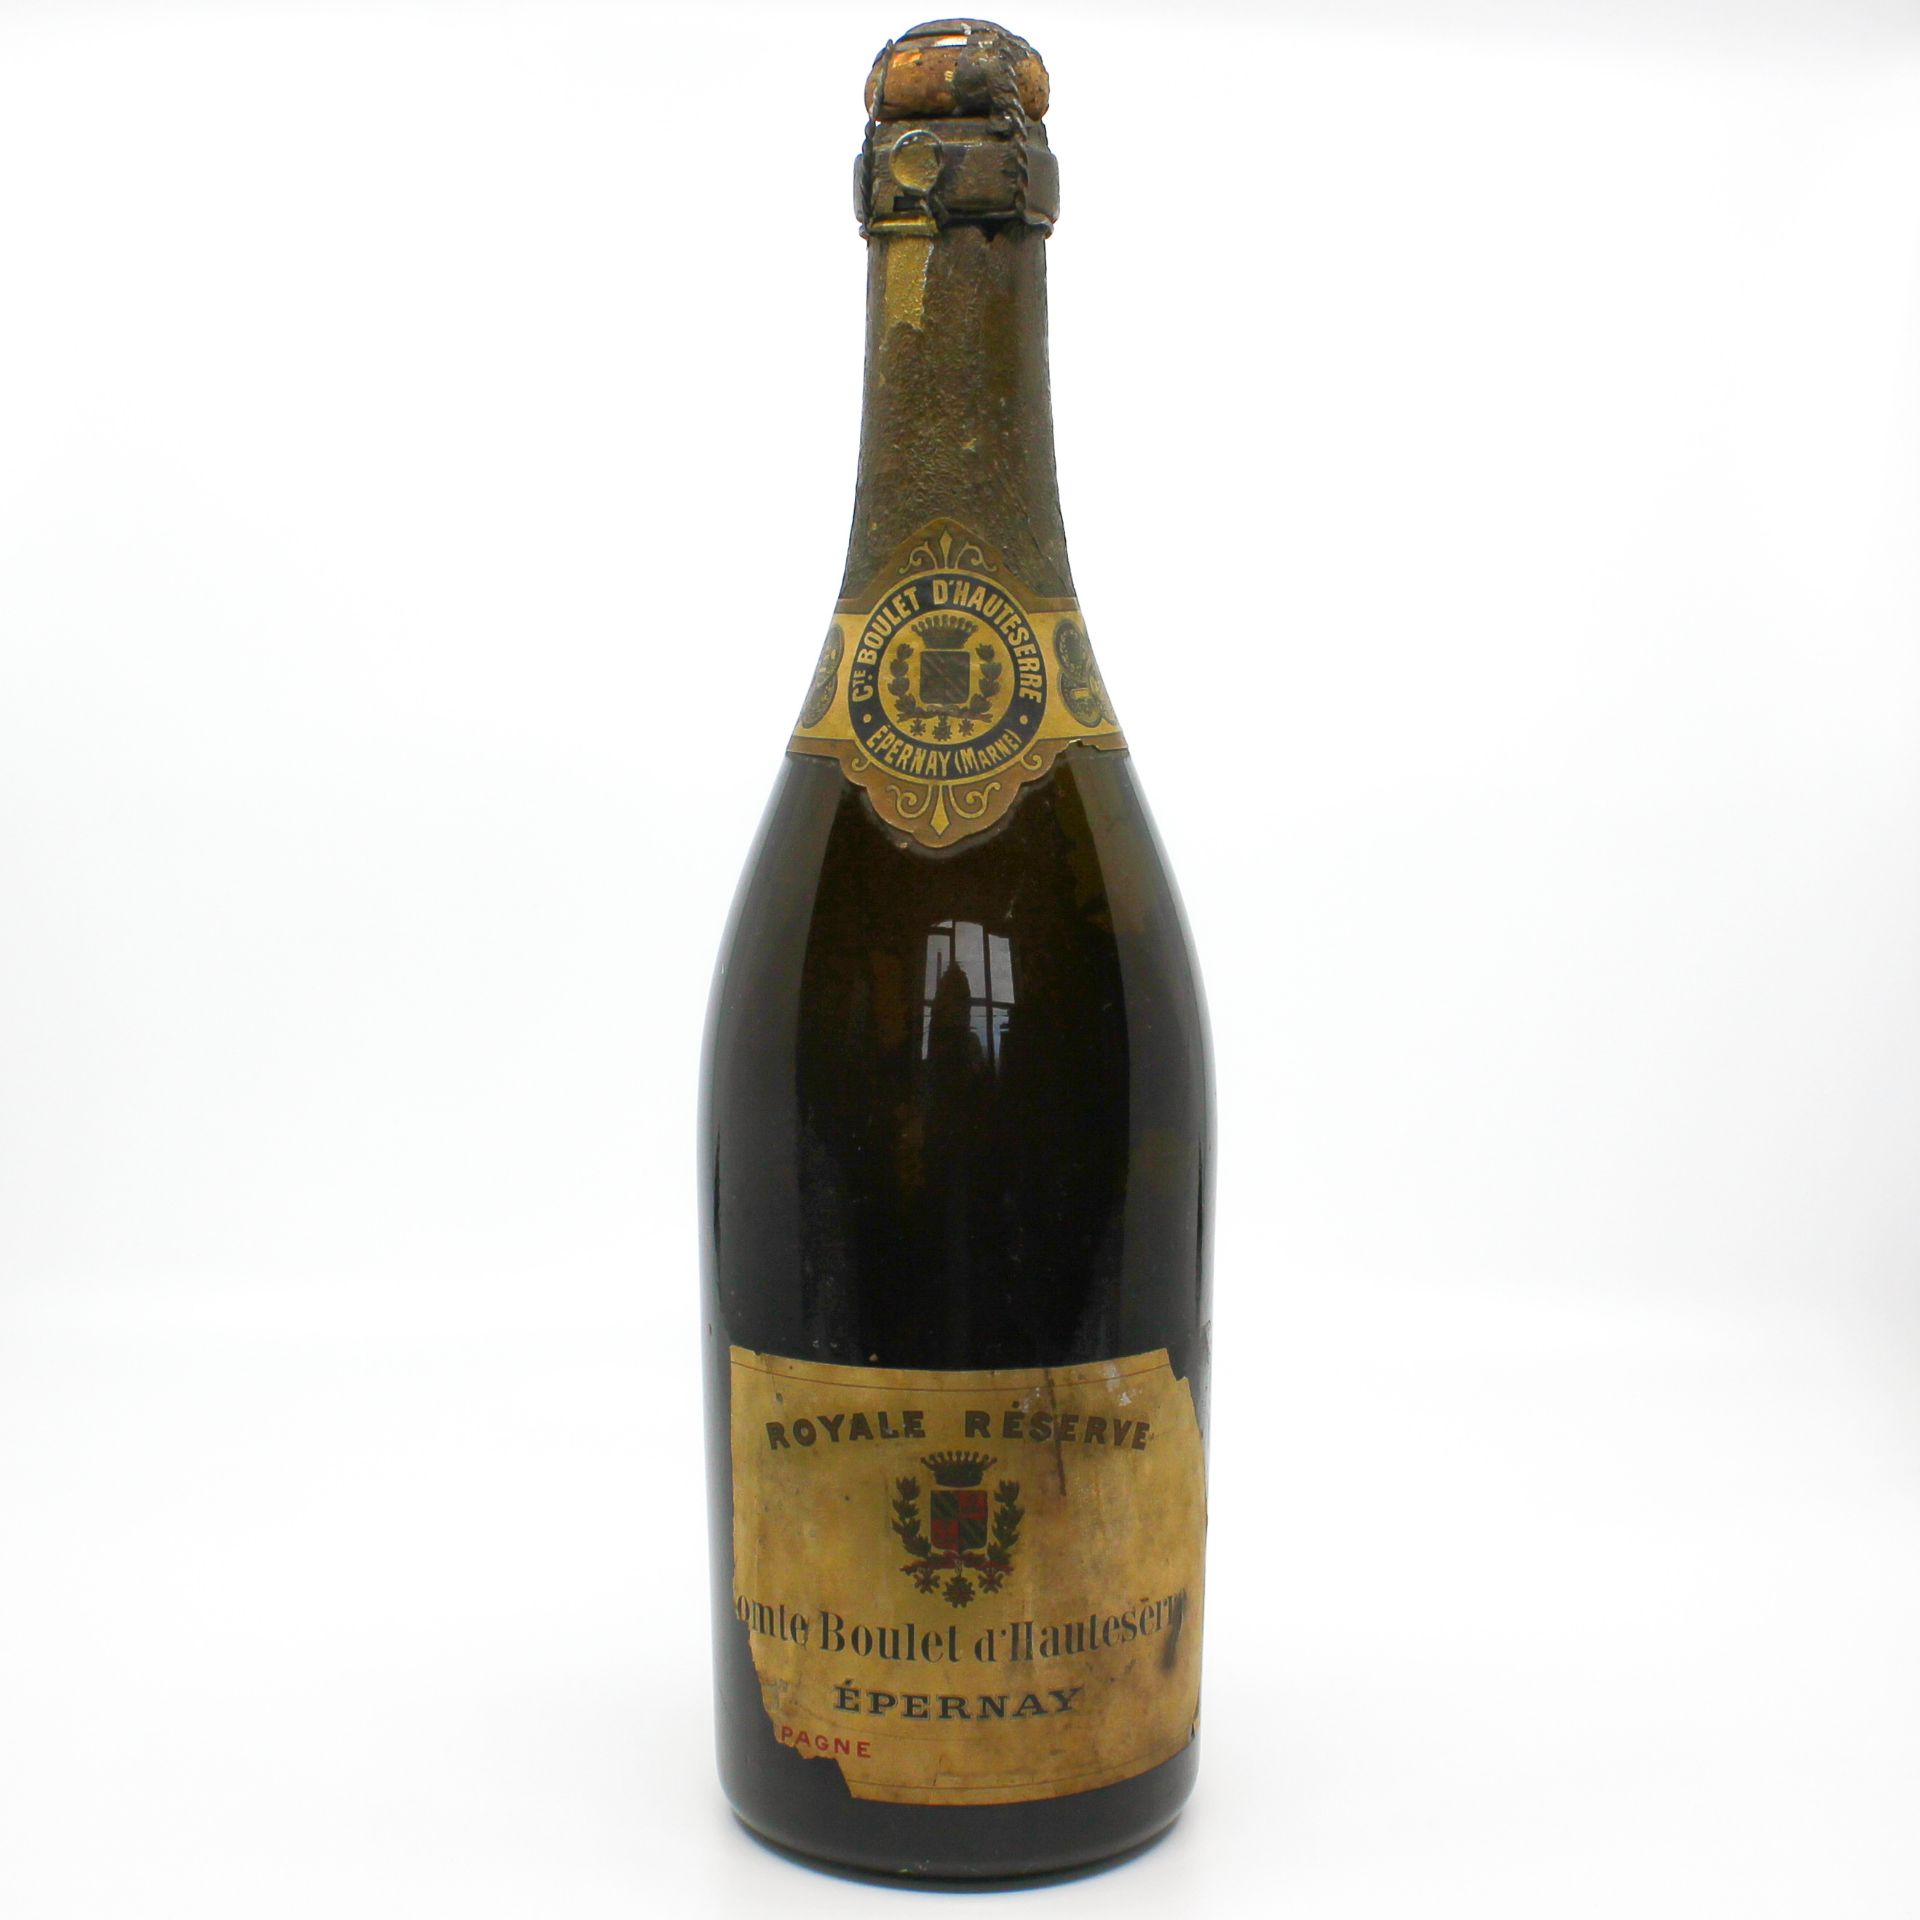 Royale Rėserve Comte Boulet d’Hautesērre Epernay WW1 Champagne c.1919 - Image 2 of 9